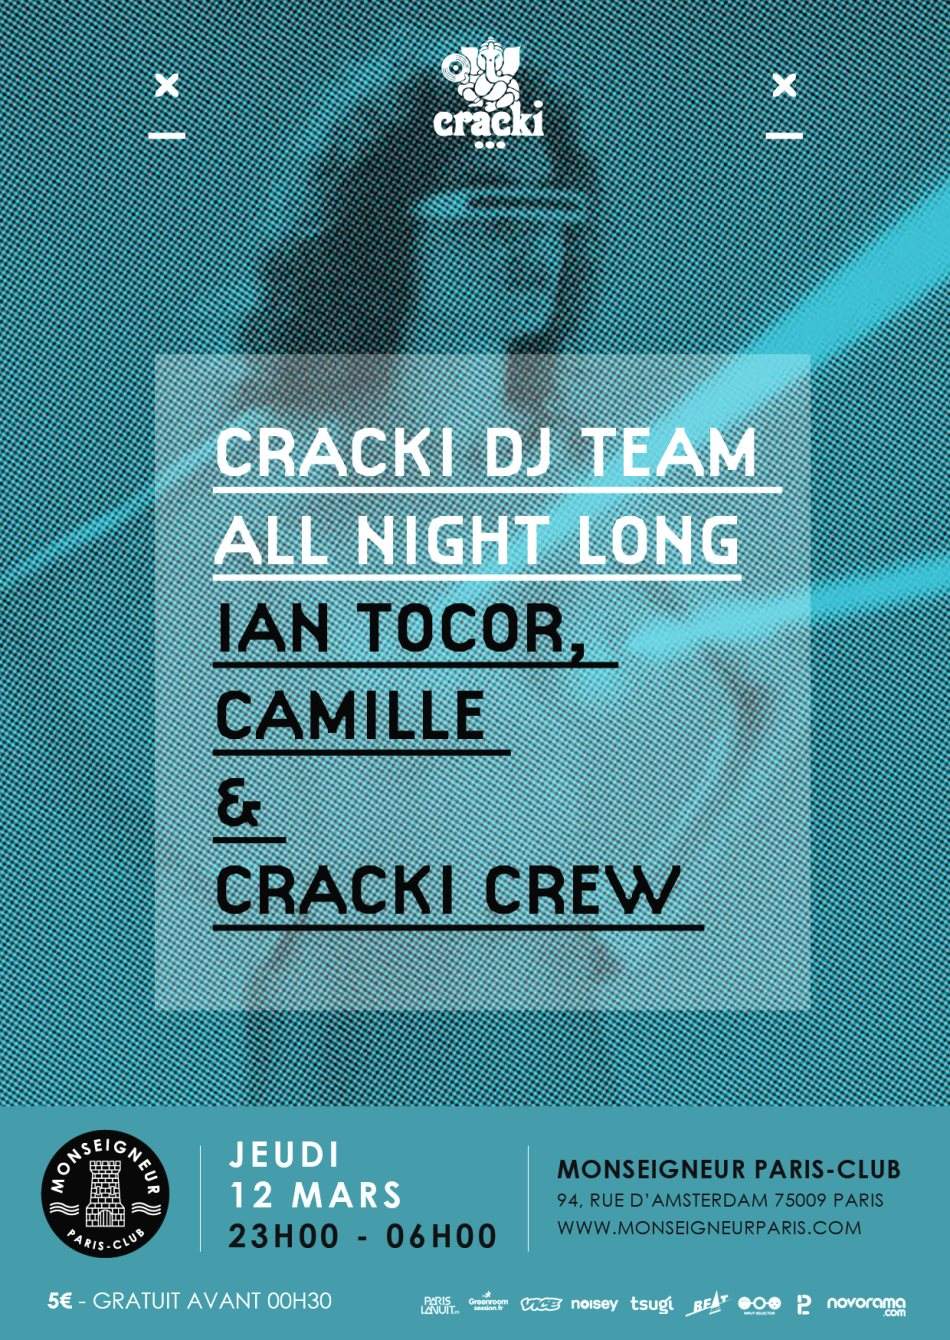 Cracki DJ Team with Ian Tocor, Camille & Cracki Crew - Página frontal